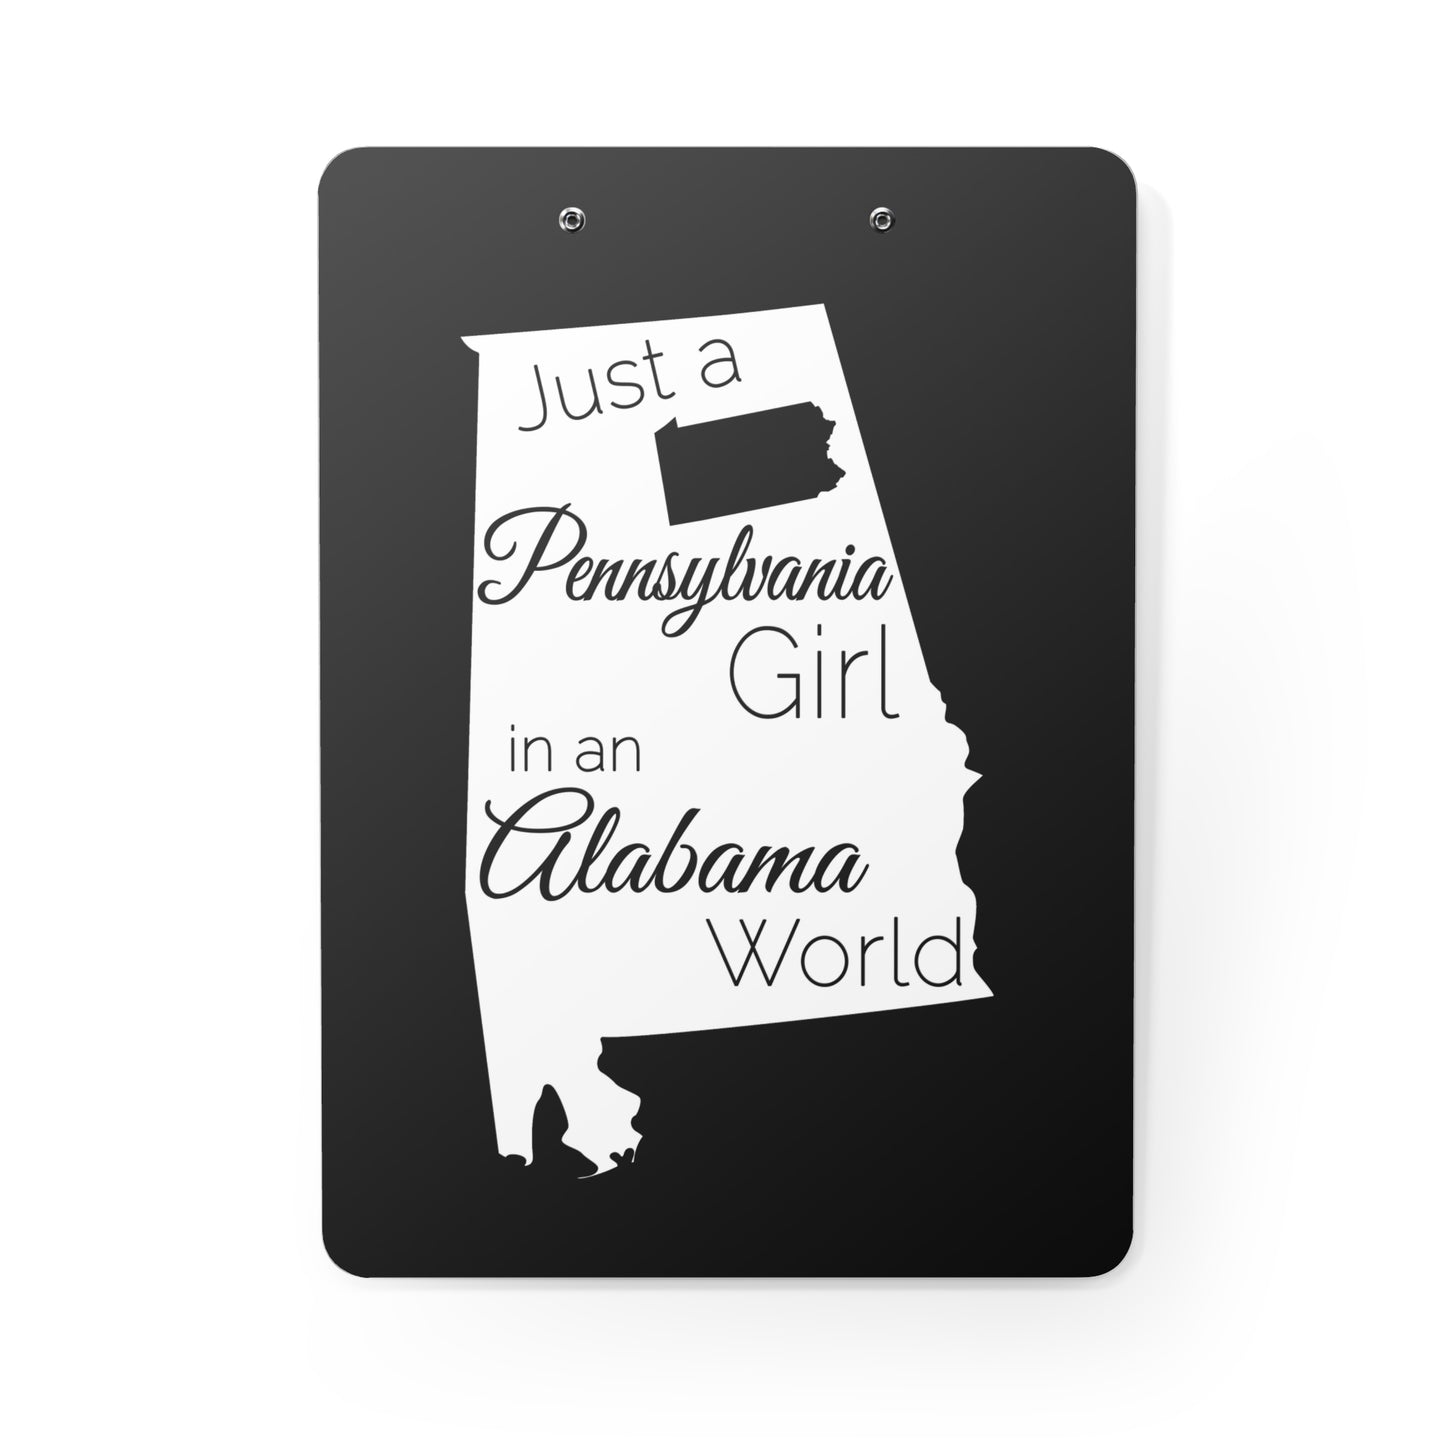 Just a Pennsylvania Girl in an Alabama World Clipboard